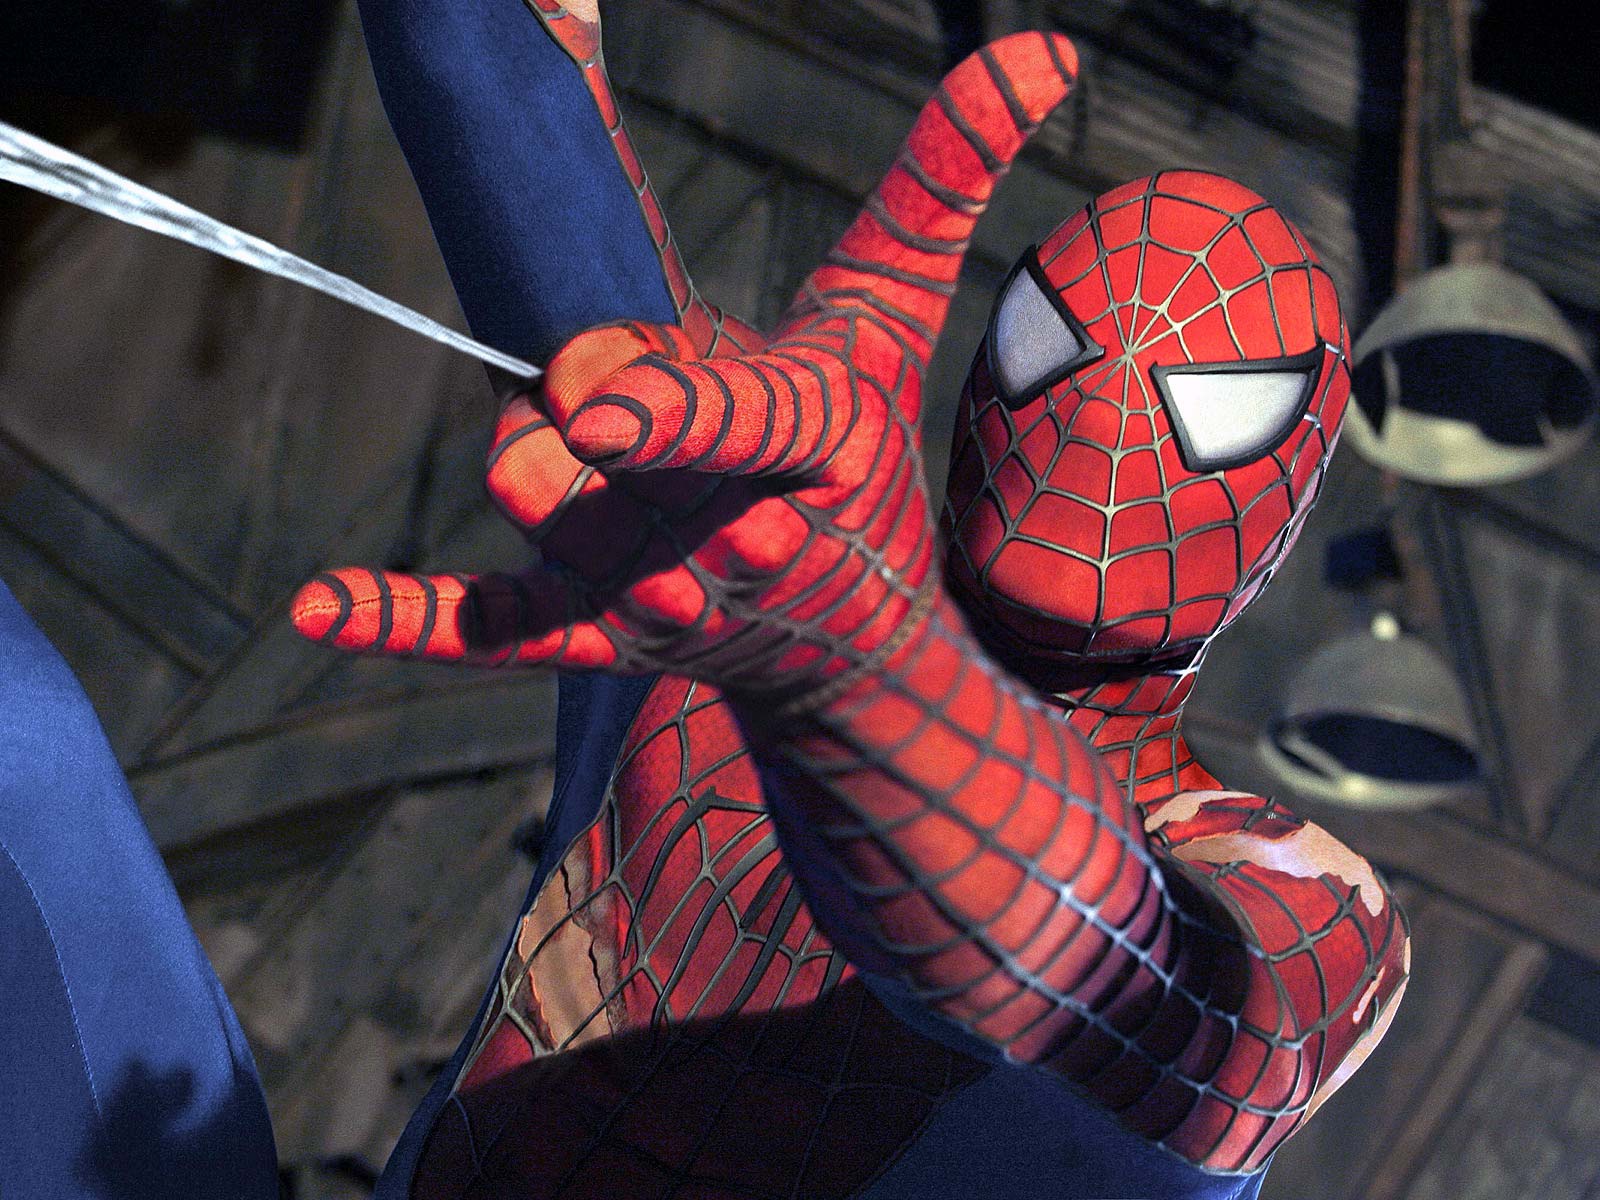 Microsoft The Amazing Spider-Man 2 Games